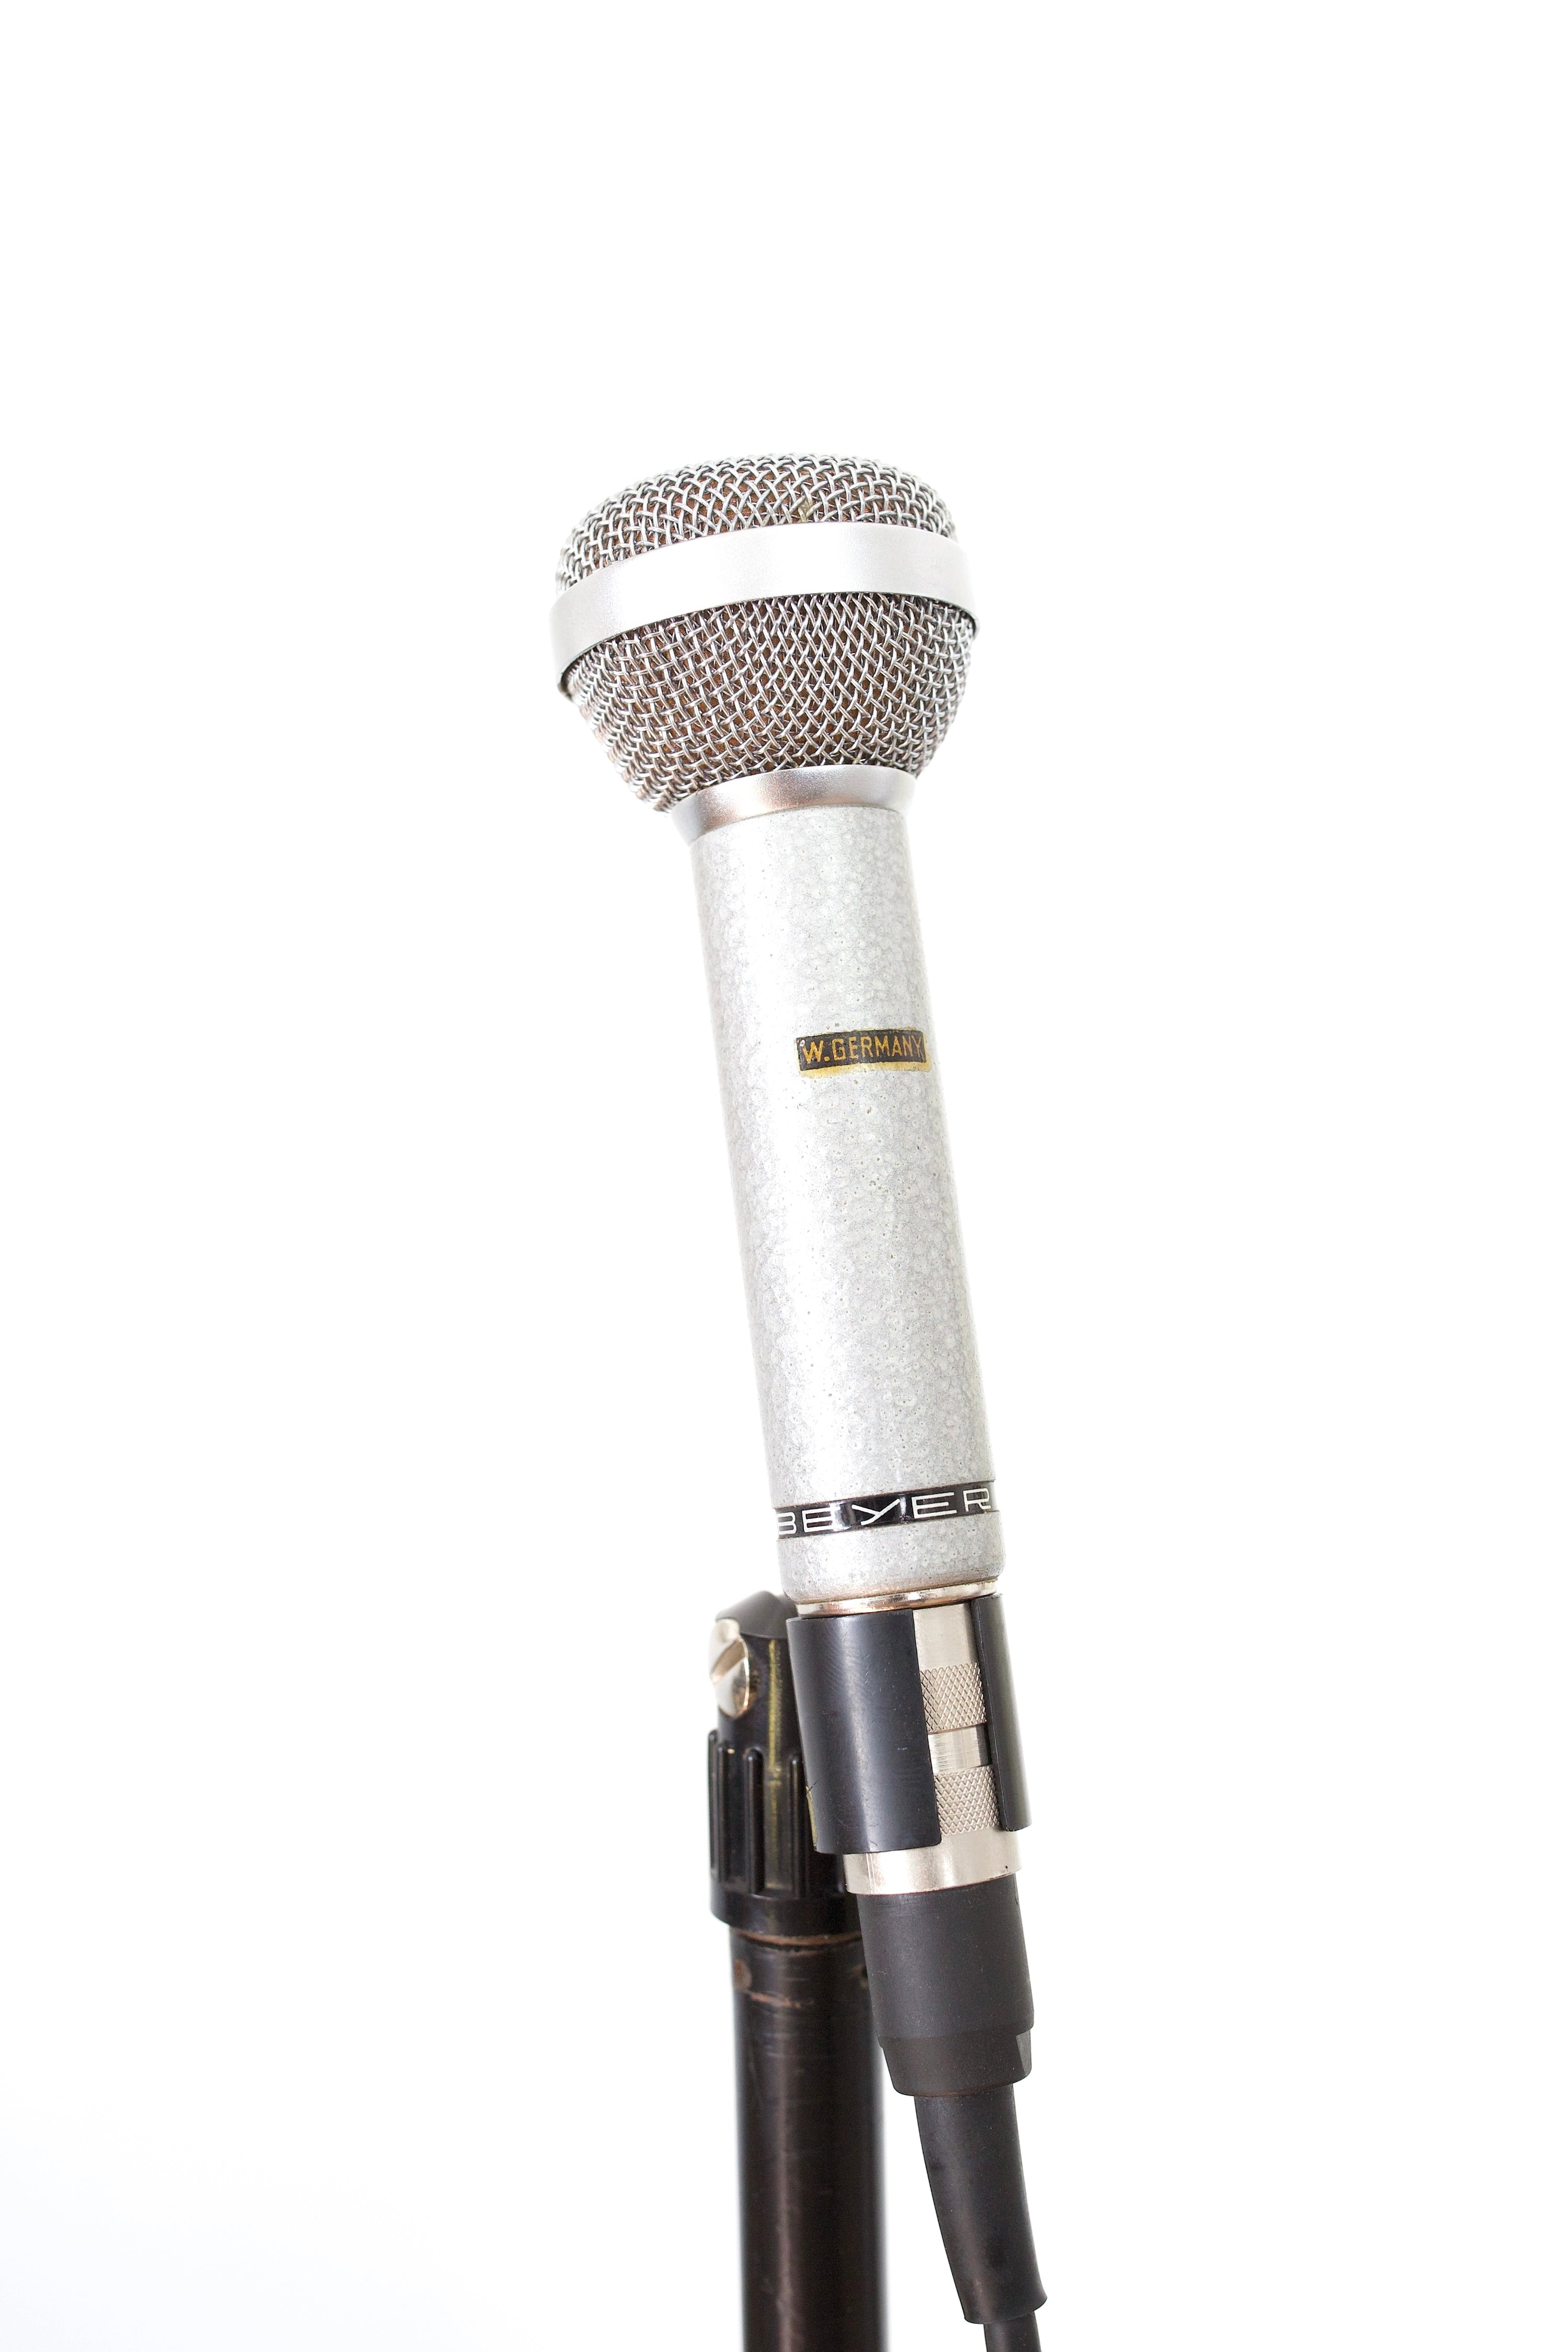 Beyer M61 Dynamic Microphone